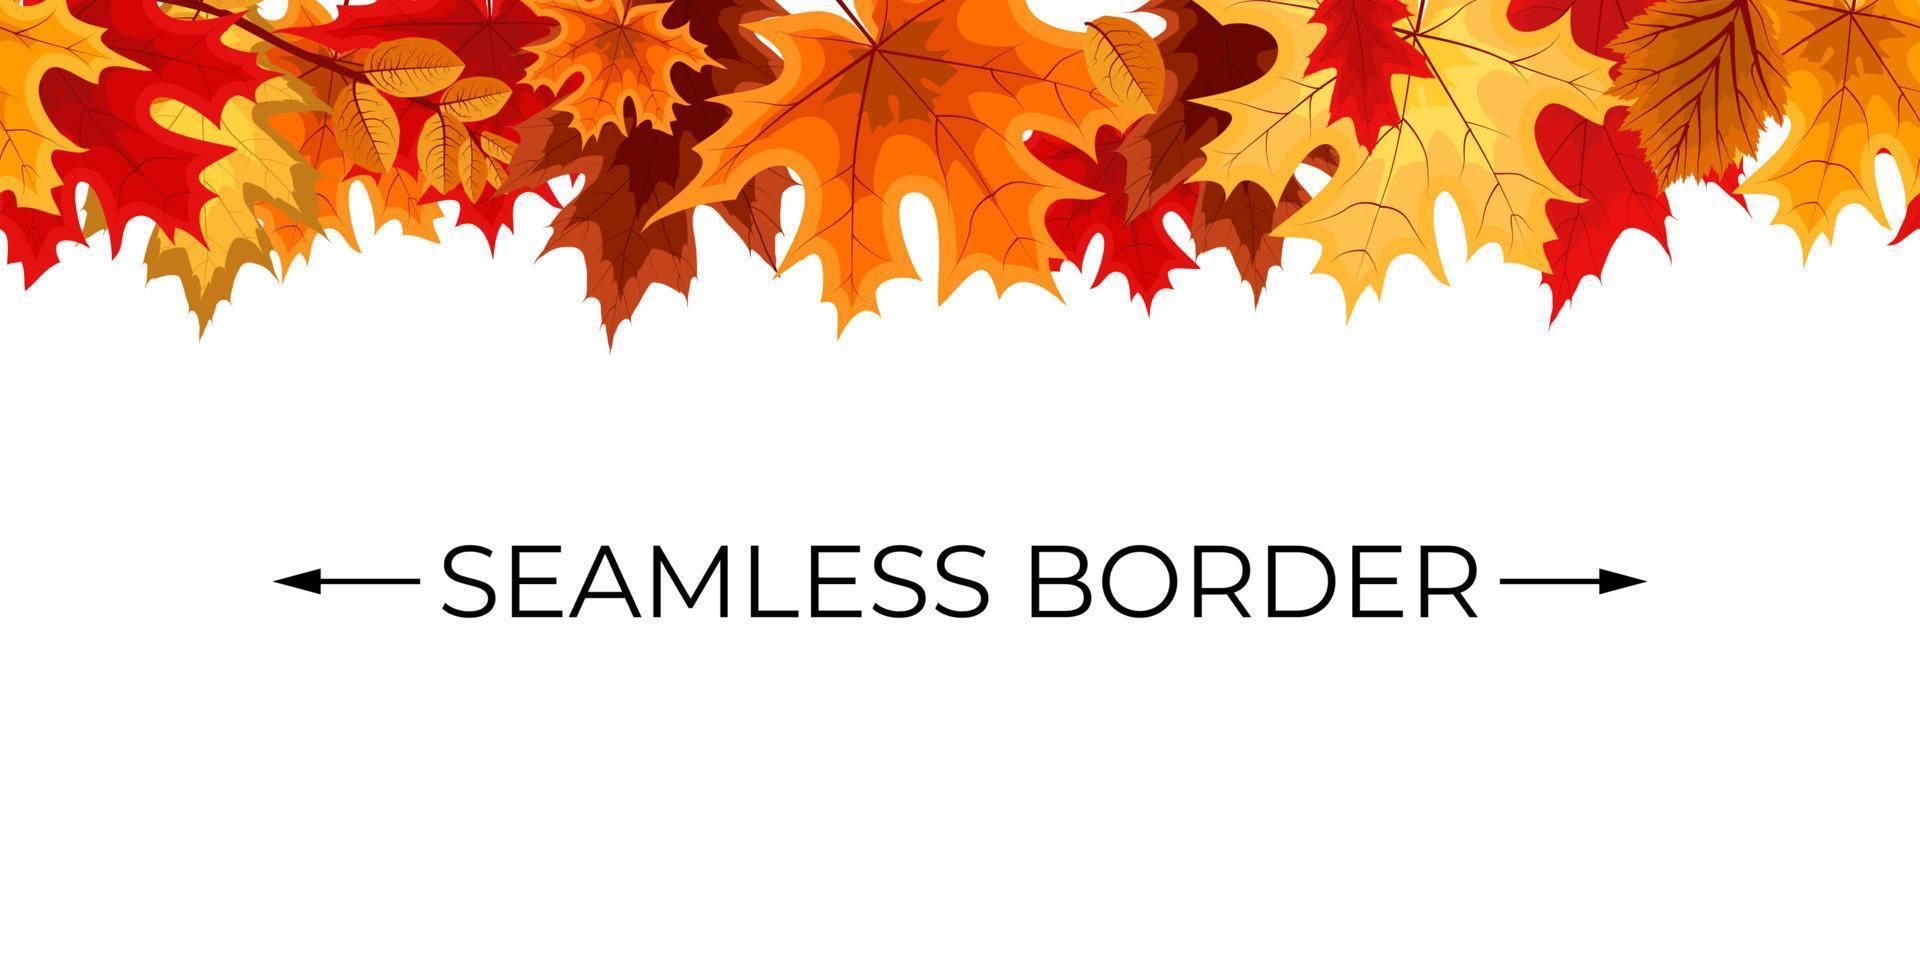 Autumn Seamless Border with Falling Autumn Leaves. Vector Illustration